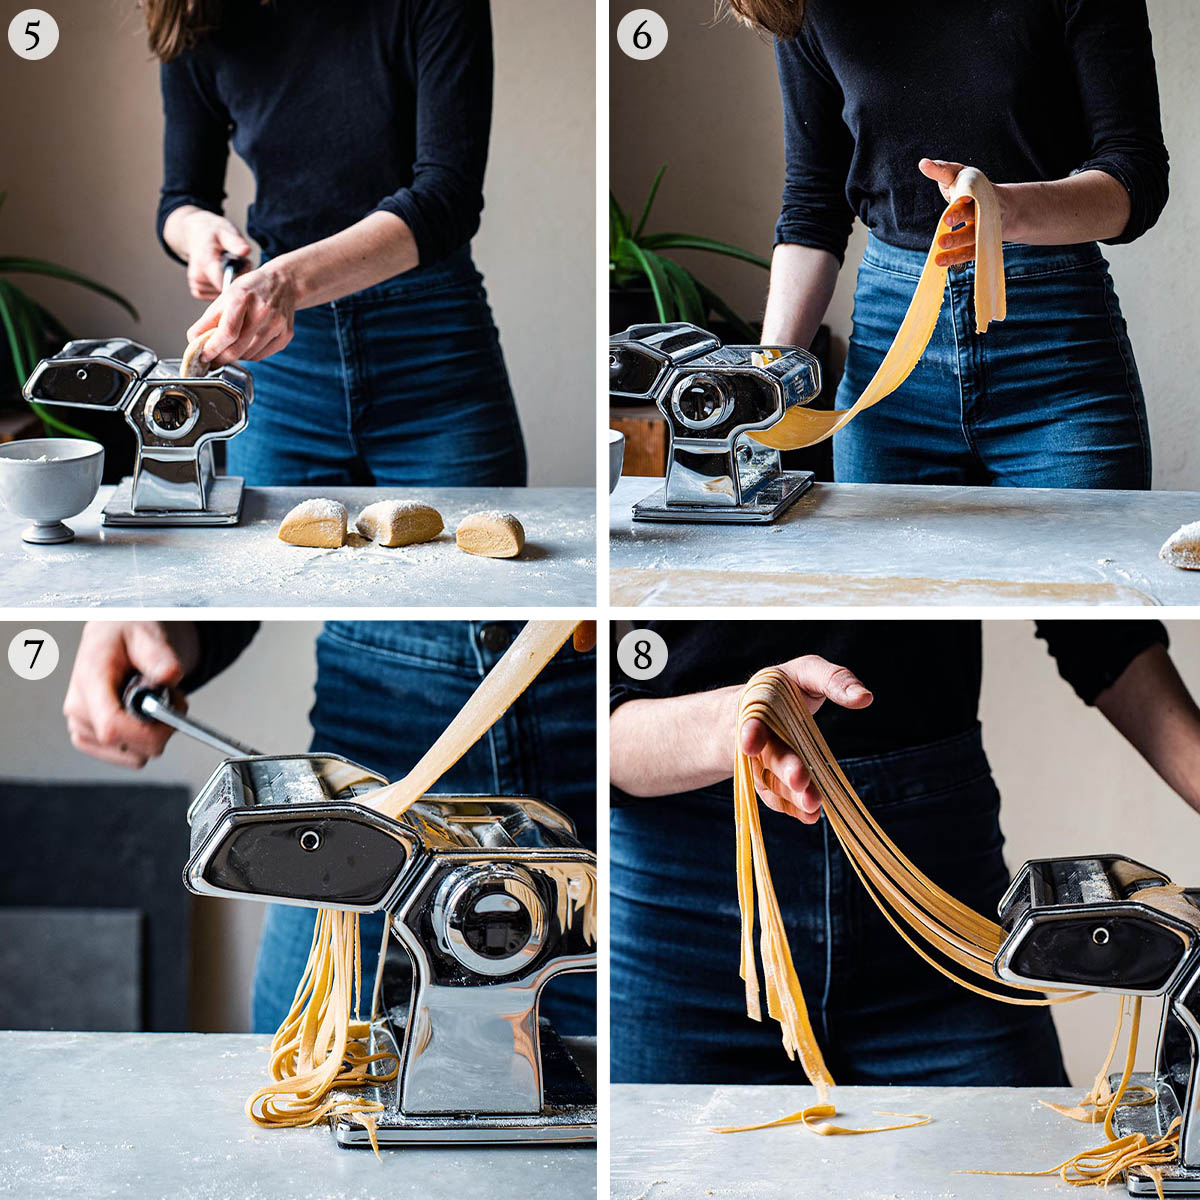 Homemade pasta steps 5 to 8.